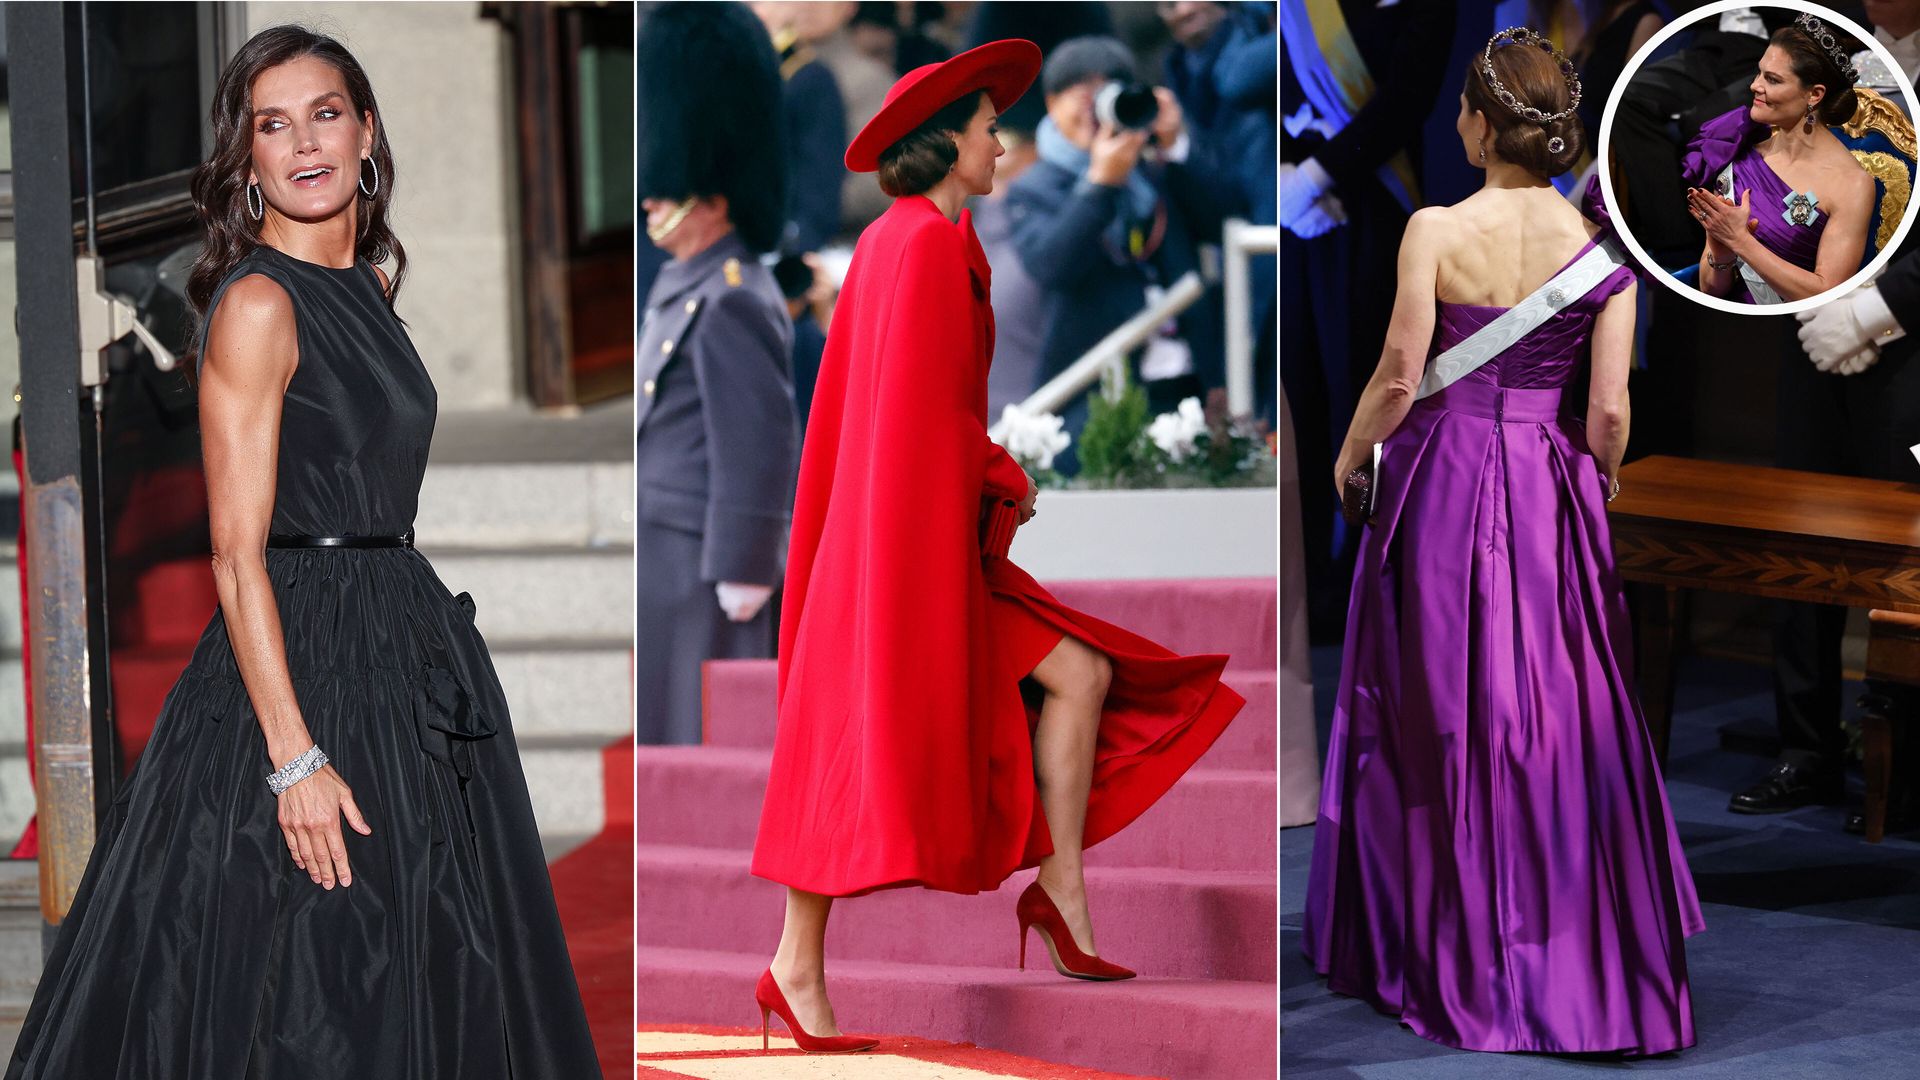 Queen Letizia, Princess Kate and Crown Princess Victoria split screen